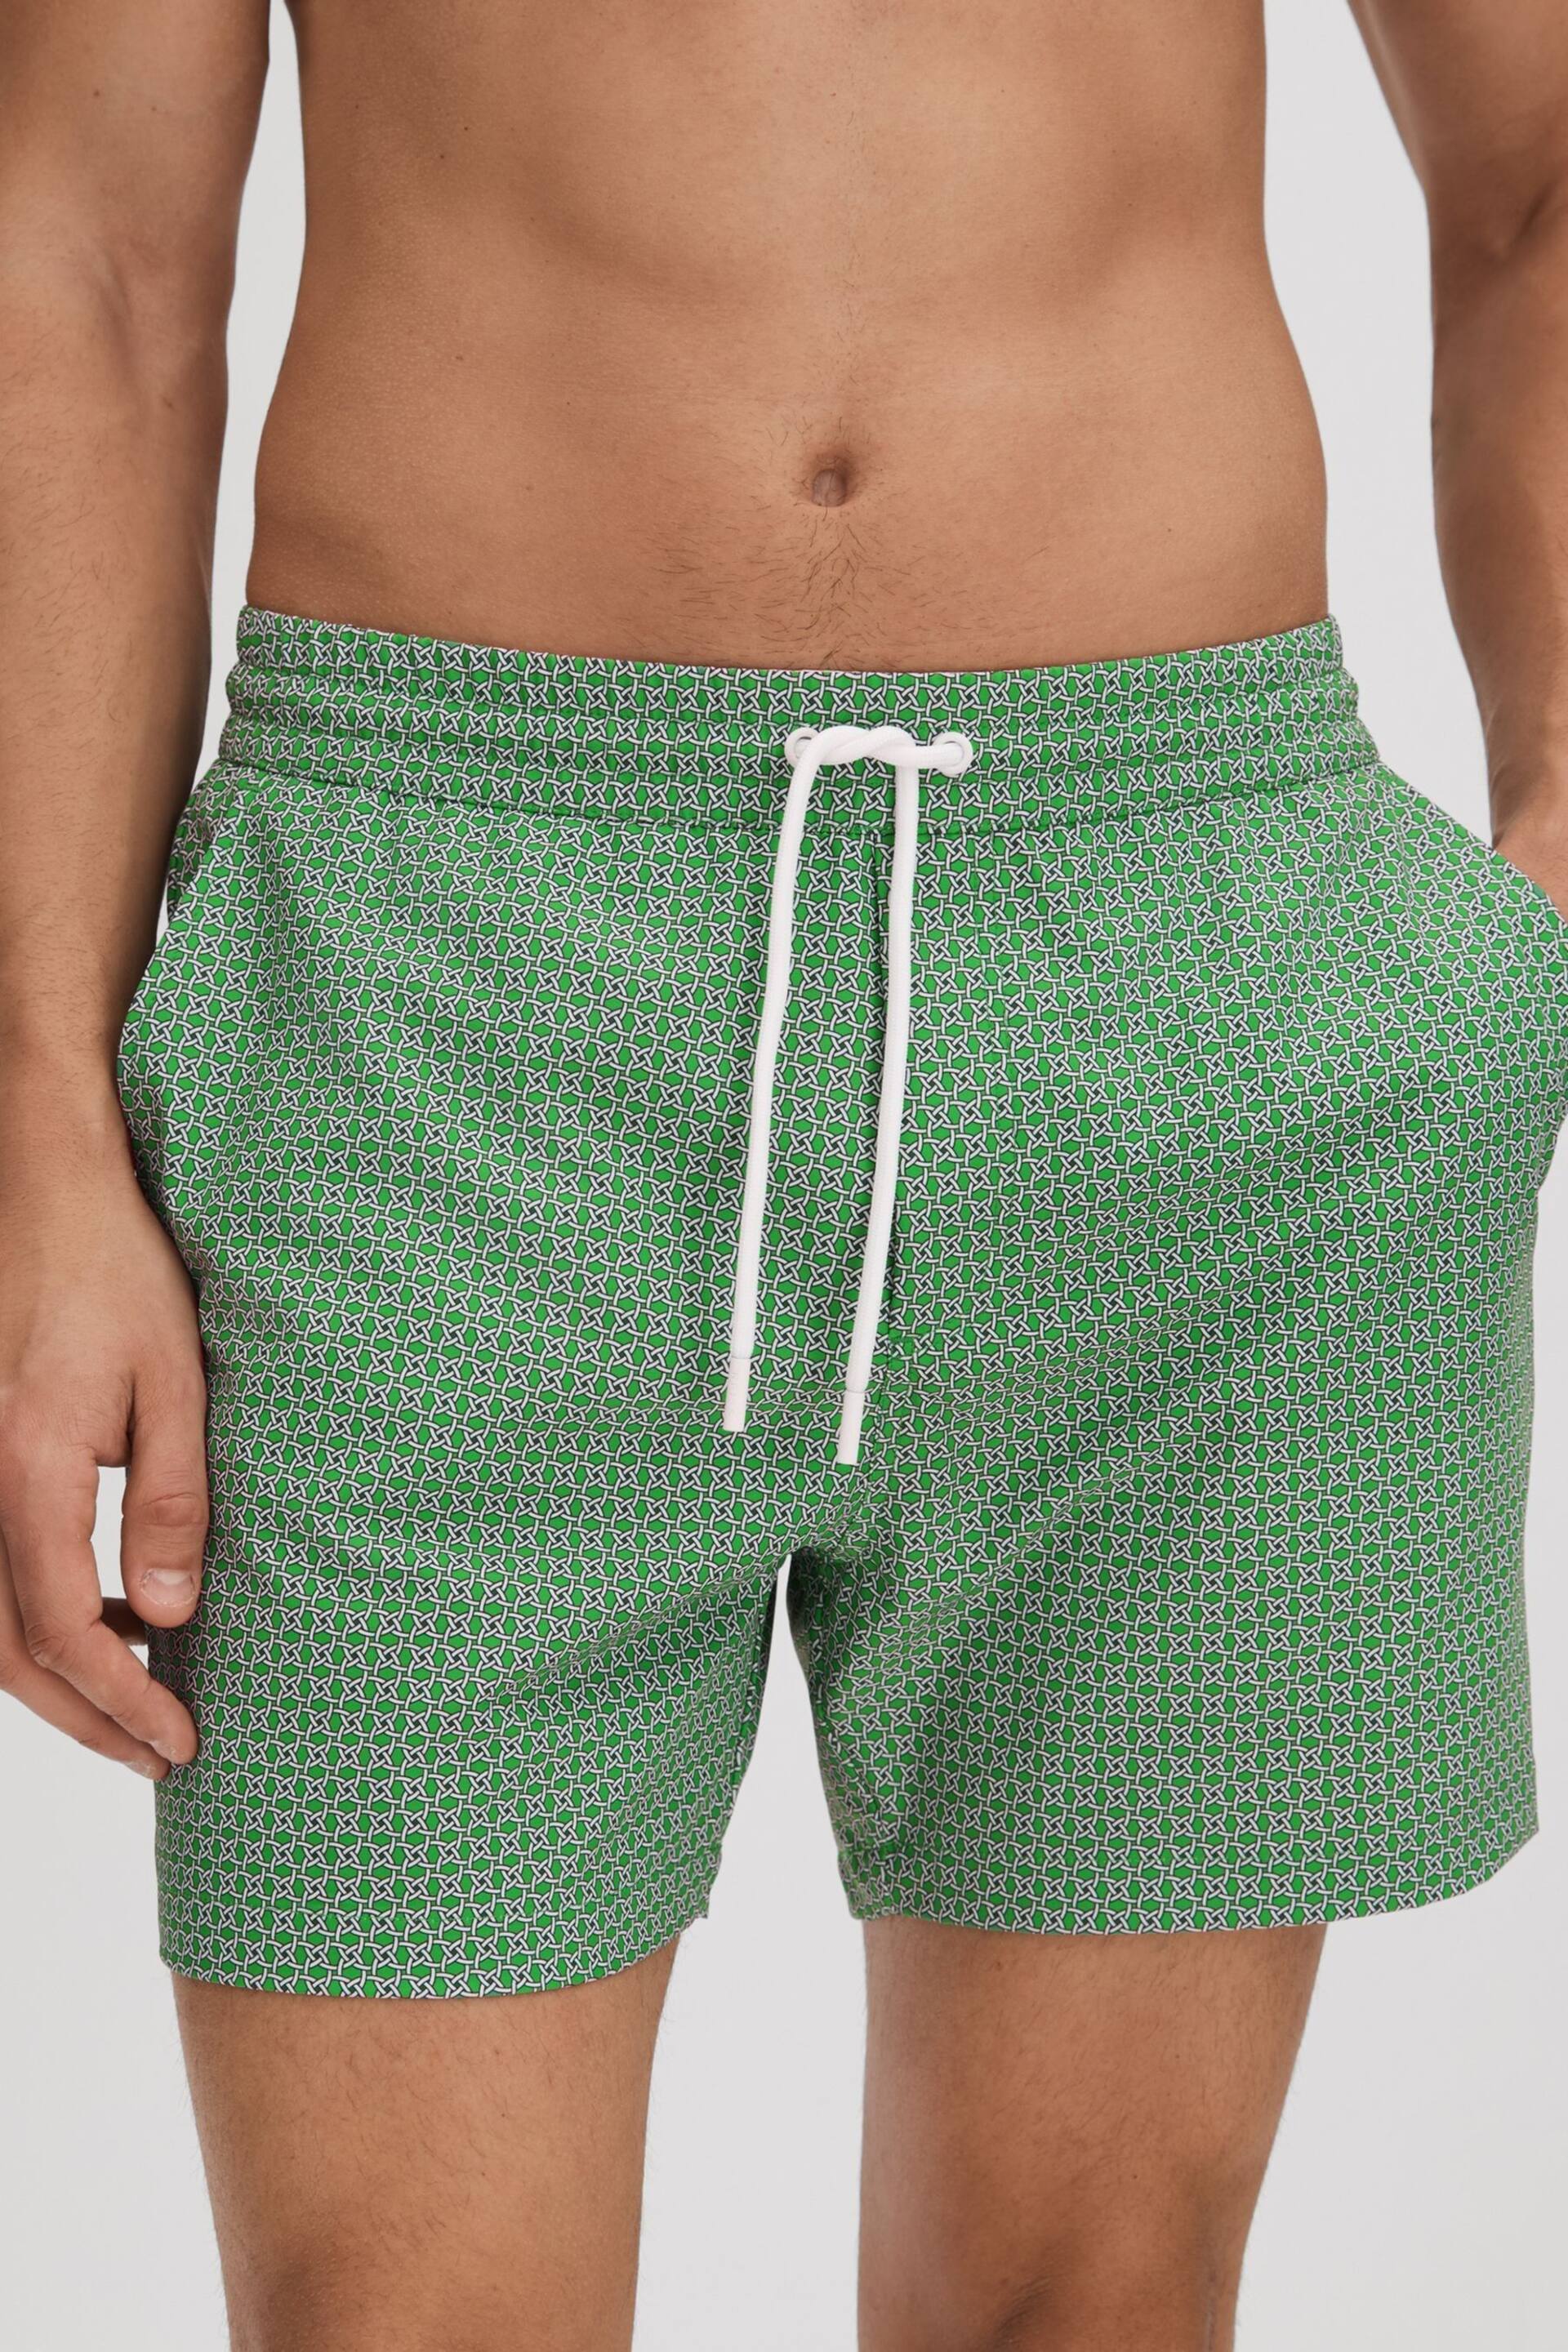 Reiss Bright Green/White Shape Printed Drawstring Swim Shorts - Image 3 of 6